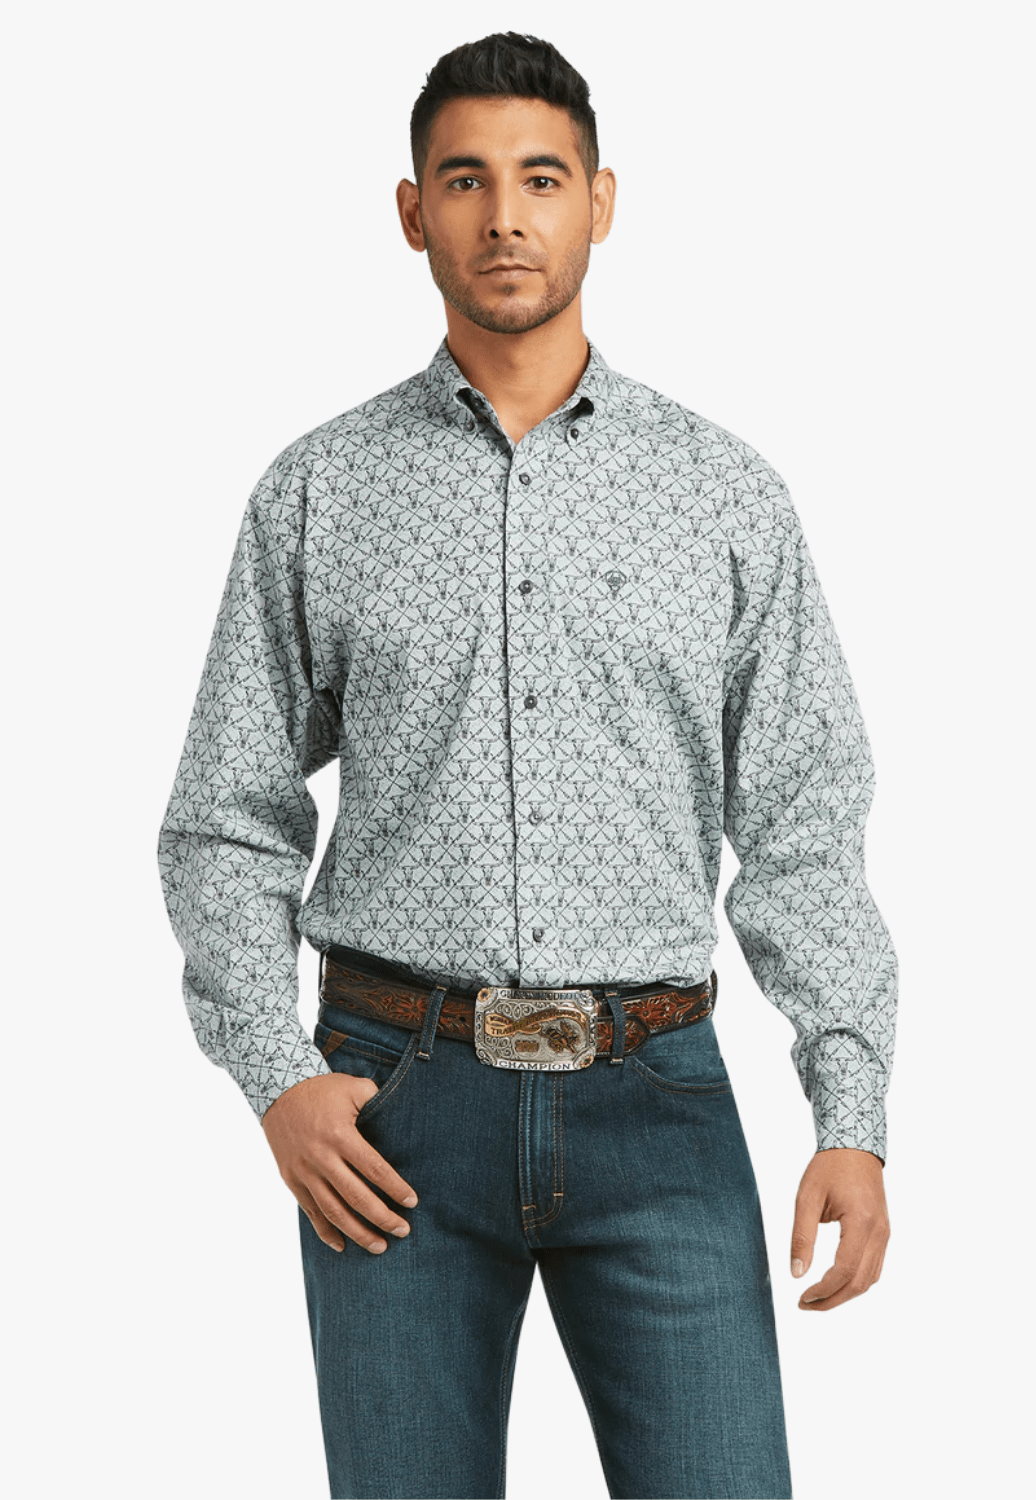 Men's Shirts, Men's Western & Country Shirts